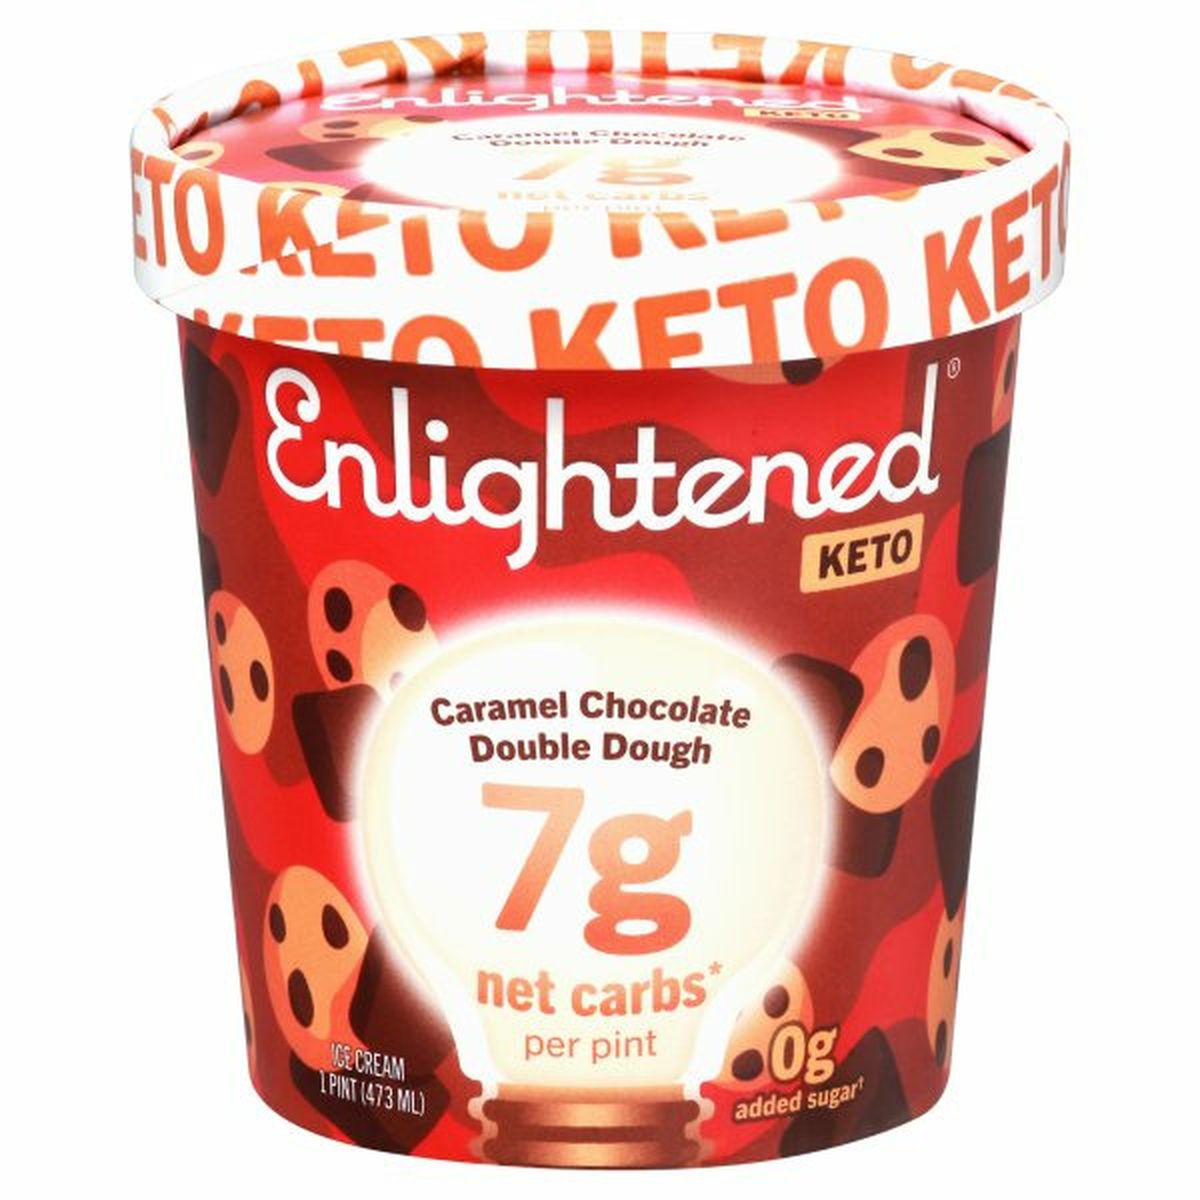 Calories in Enlightened Keto Ice Cream, Caramel Chocolate Double Dough